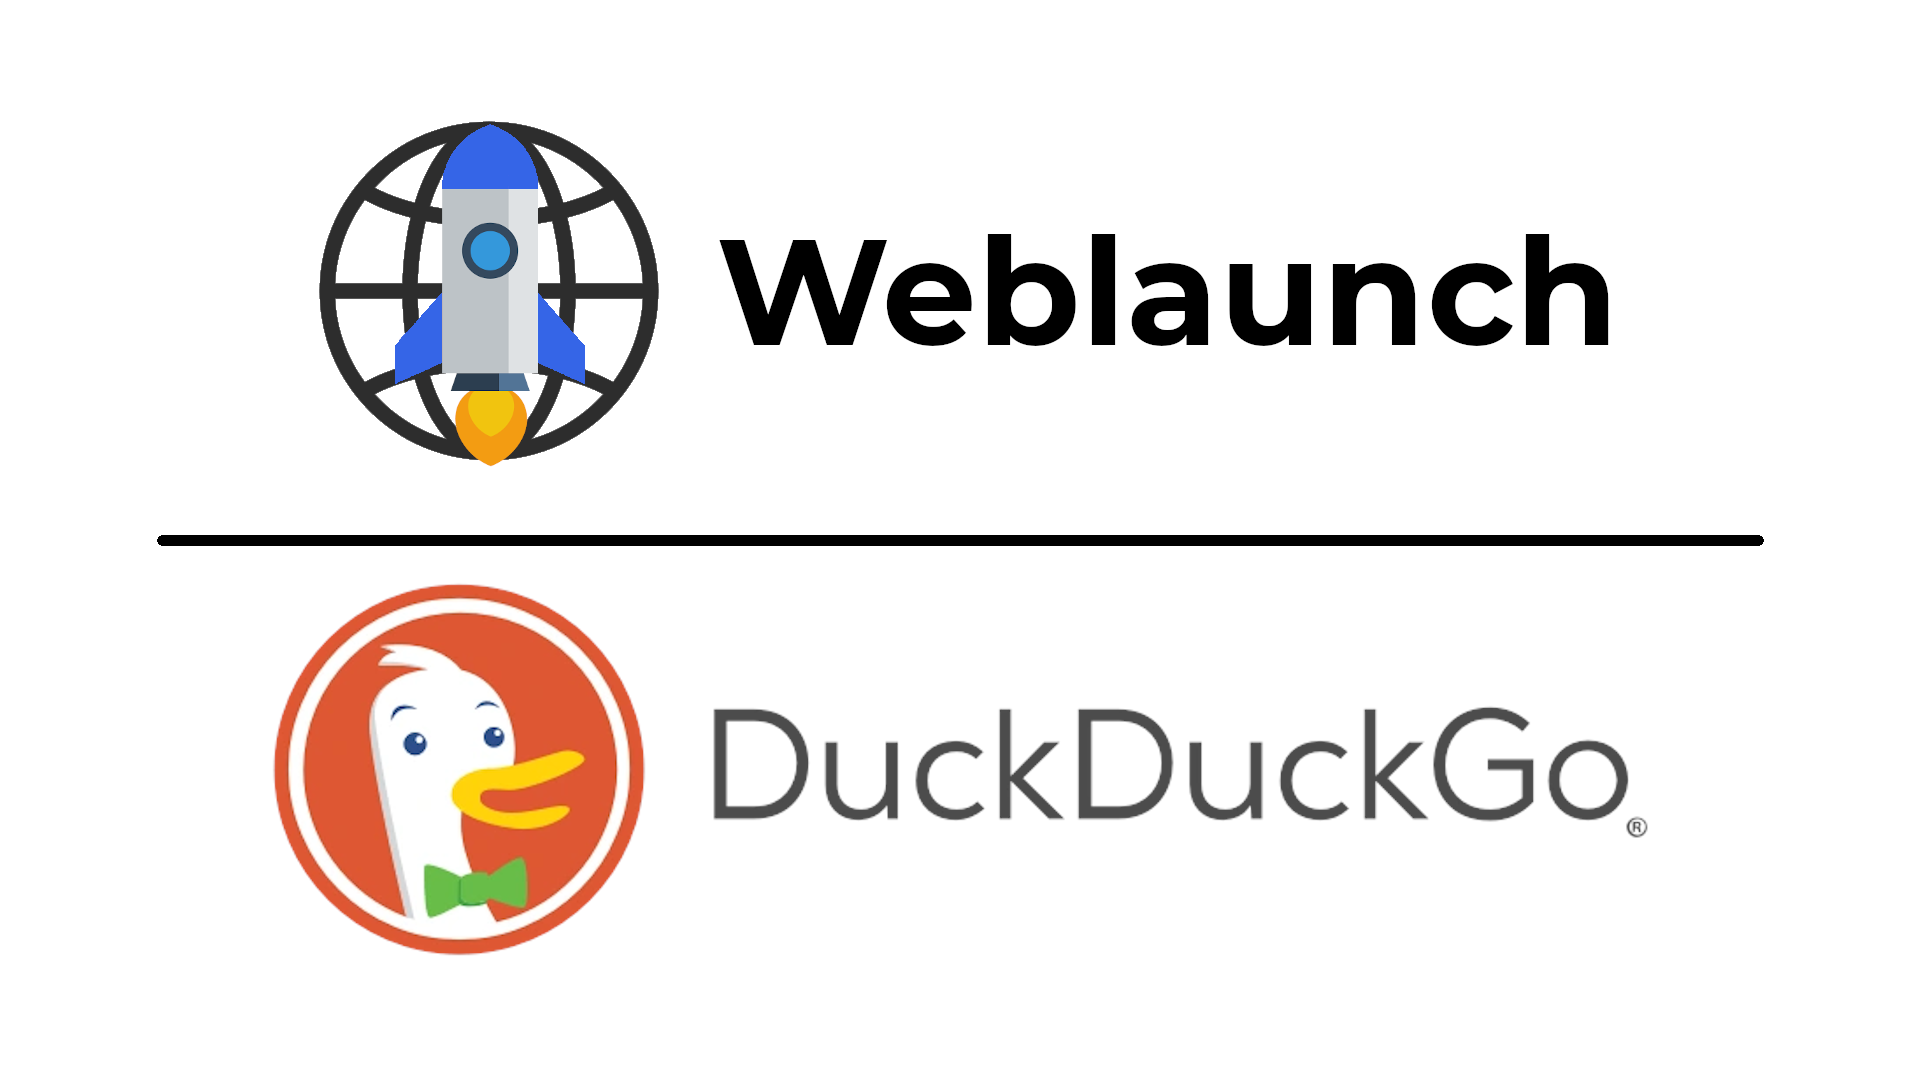 Weblaunch switches to DuckDuckGo